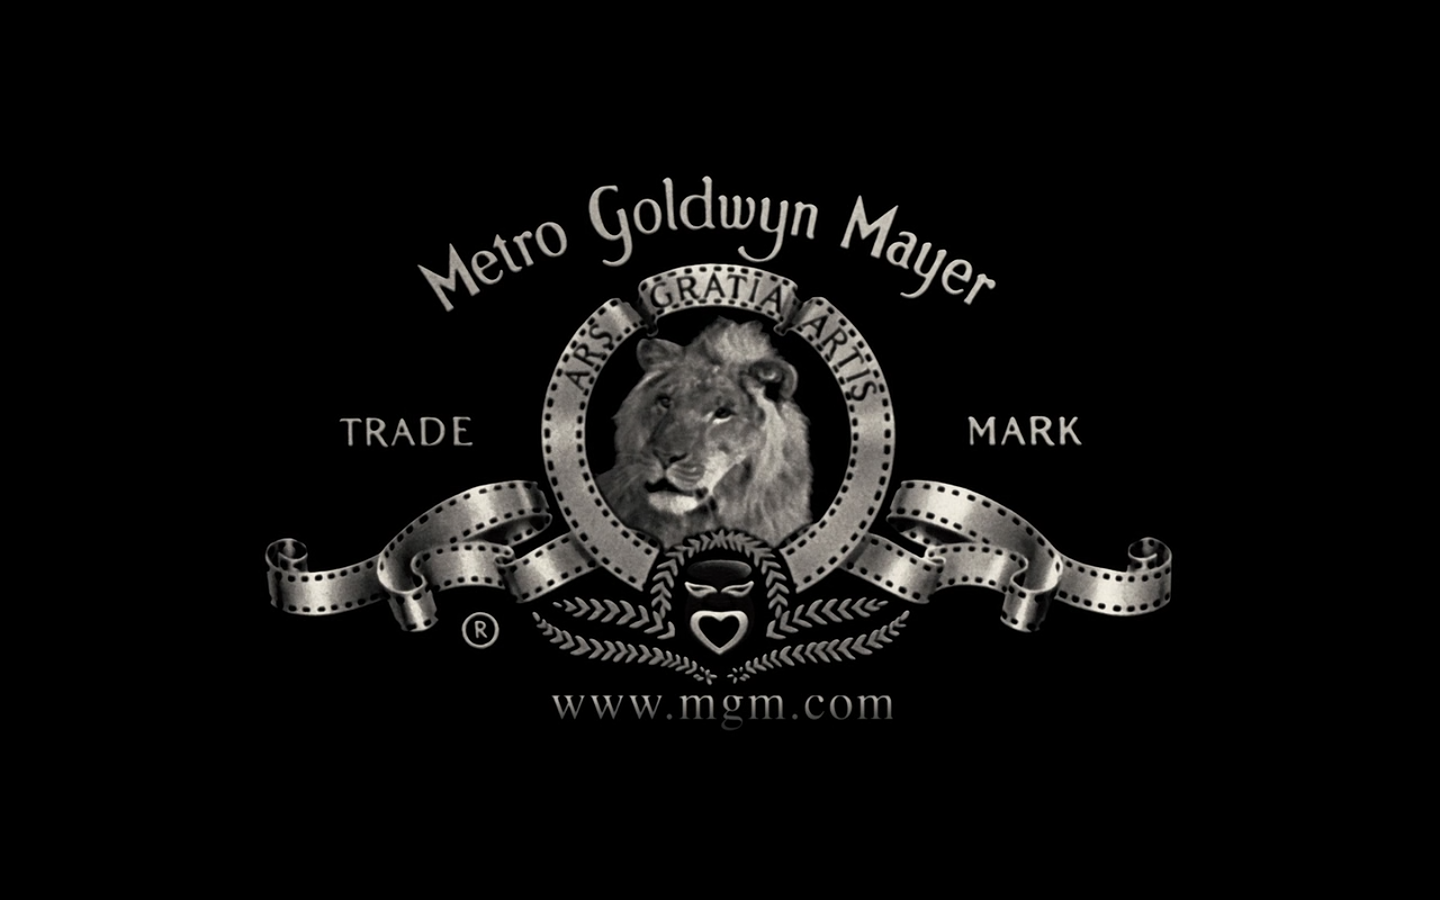 mgm-logo-casino-royale.png